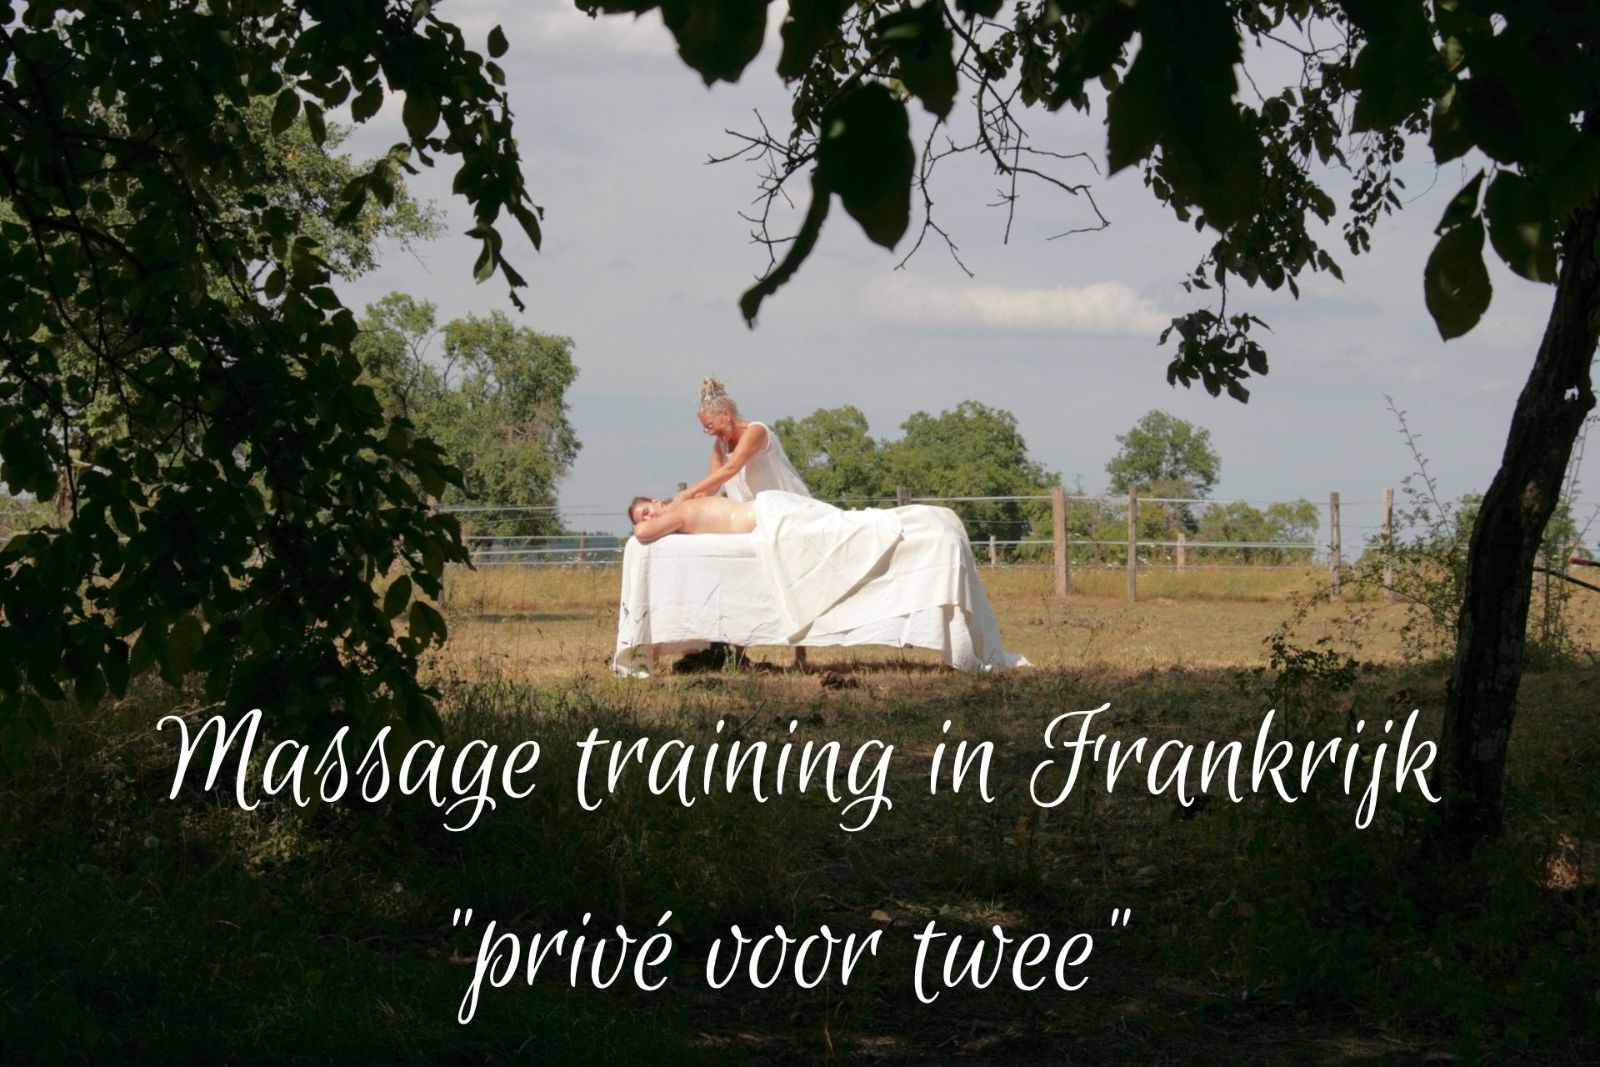 Massage training in Frankrijk